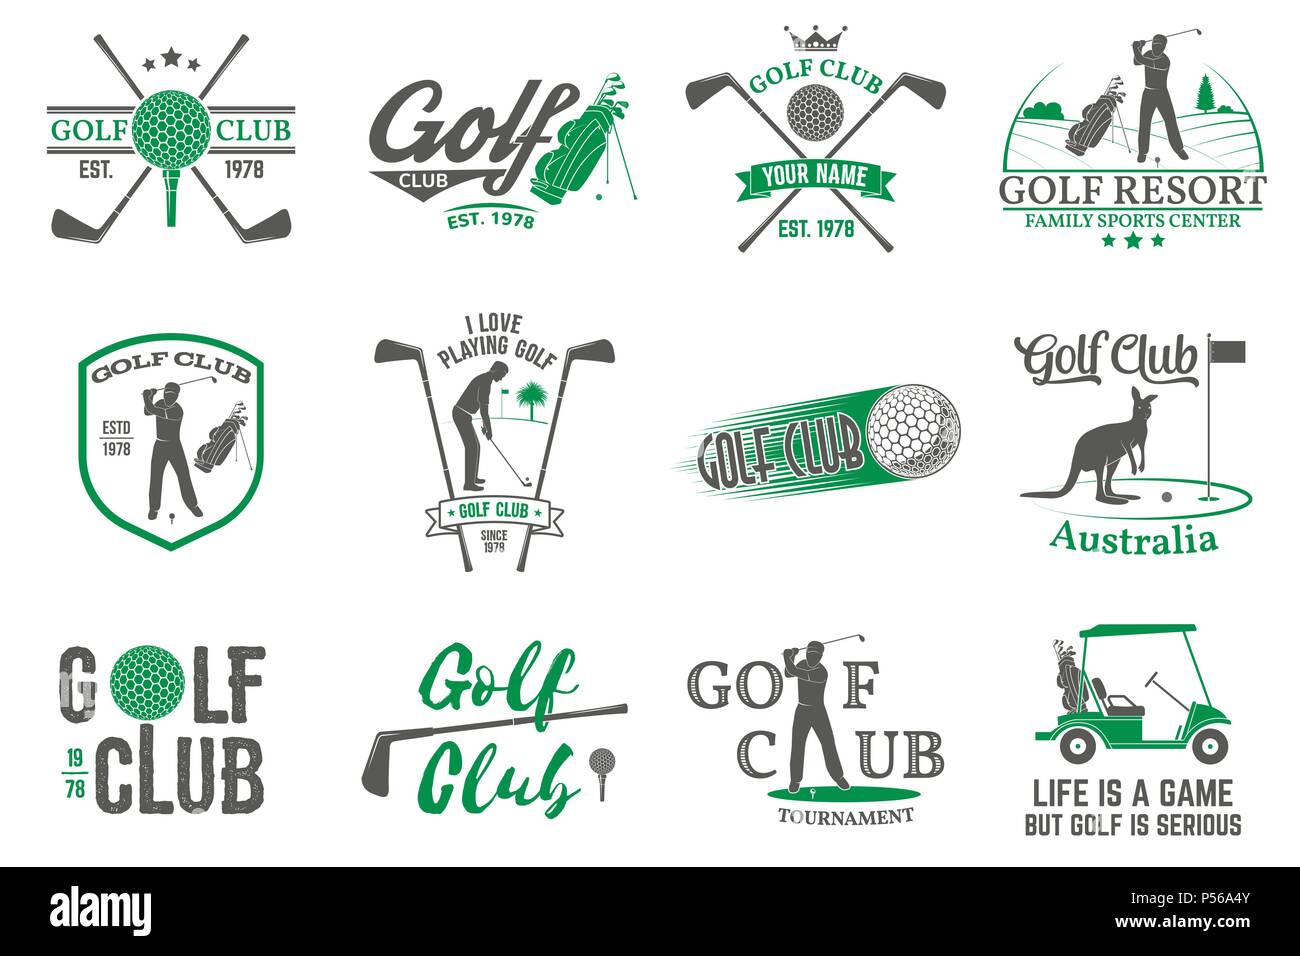 Juego de golf club concepto con el golfista silueta. Club de golf vector logo retro. Concepto de camiseta, impresión, sello o marca. Diseño de tipografía. Ilustración del Vector